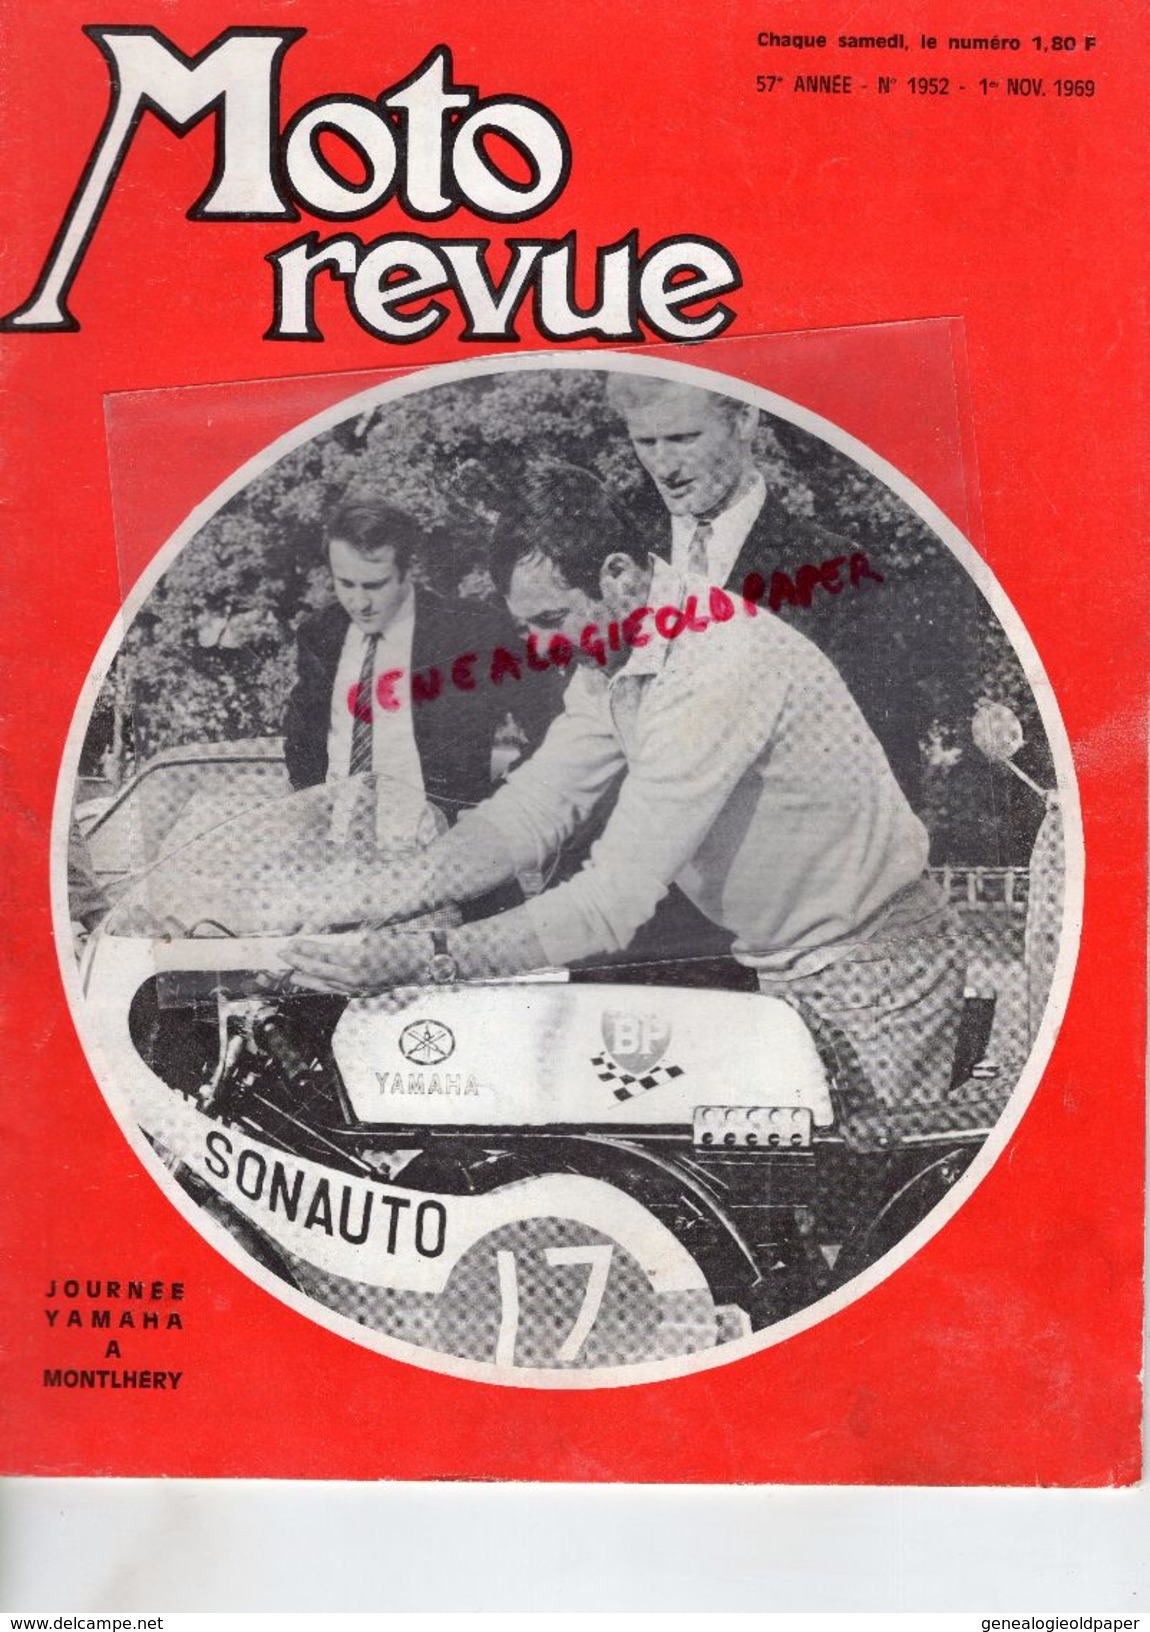 MOTO REVUE - 1-11-1969- N° 1952- YAMAHA A MONTLHERY-247 TRIAL MONTESA- PUY DE DOME- KAWASAKI A1R-VIRY CHATILLON-TRIUMPH - Motorfietsen